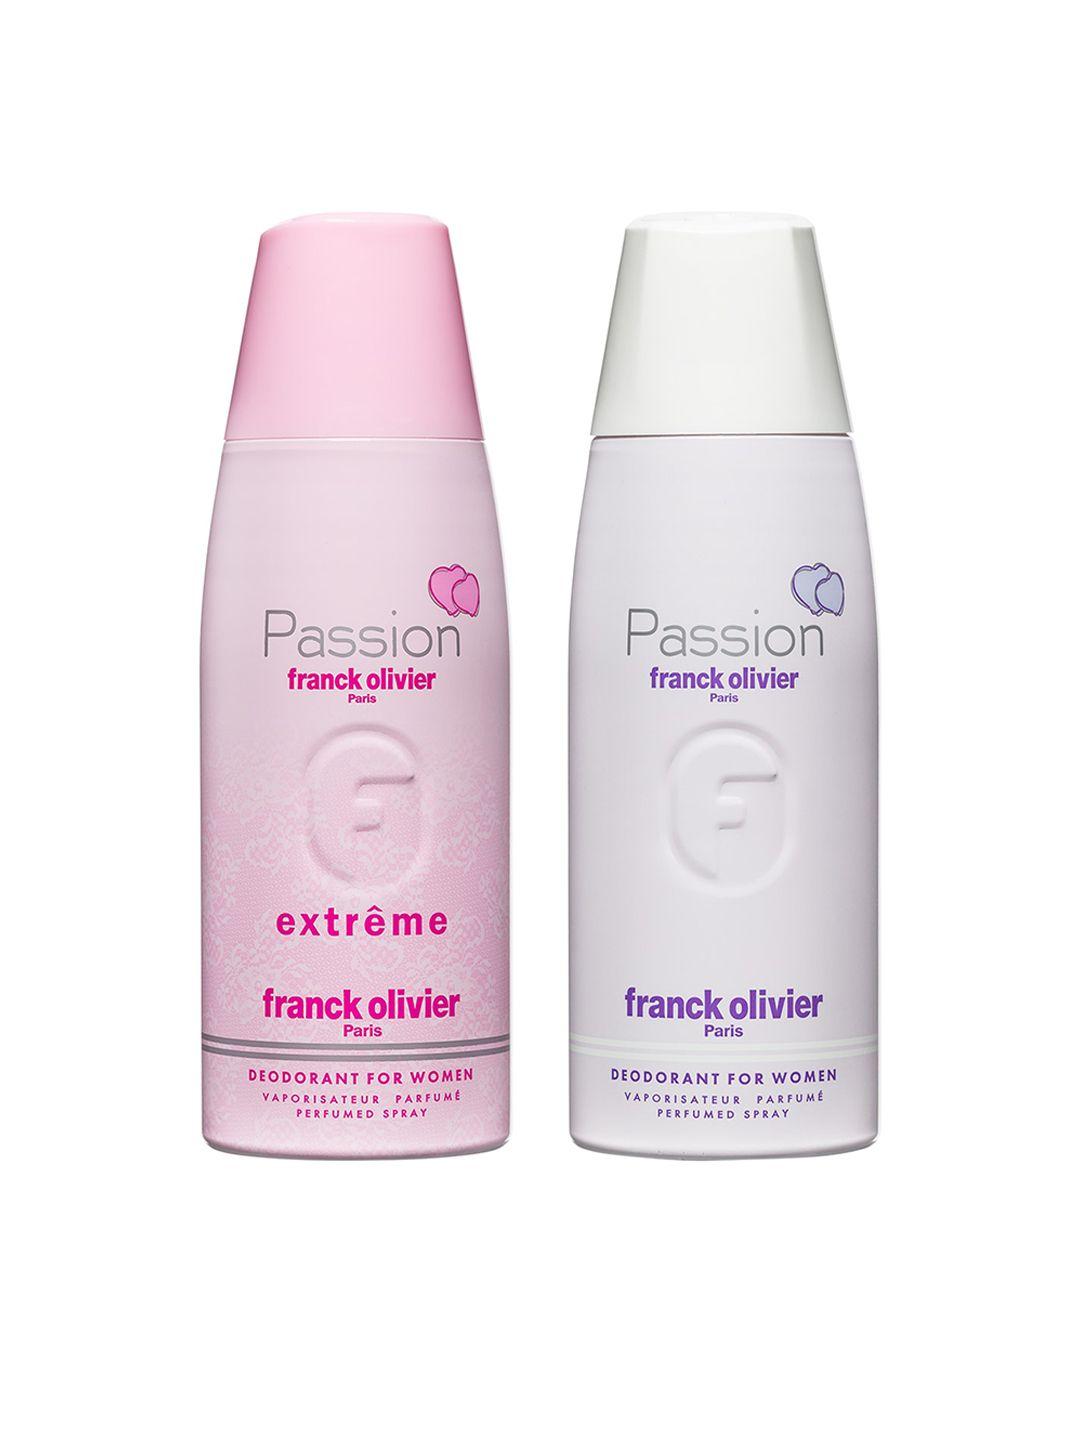 franck olivier women set of 2 odour control deodorant spray 250ml each - extreme & passion